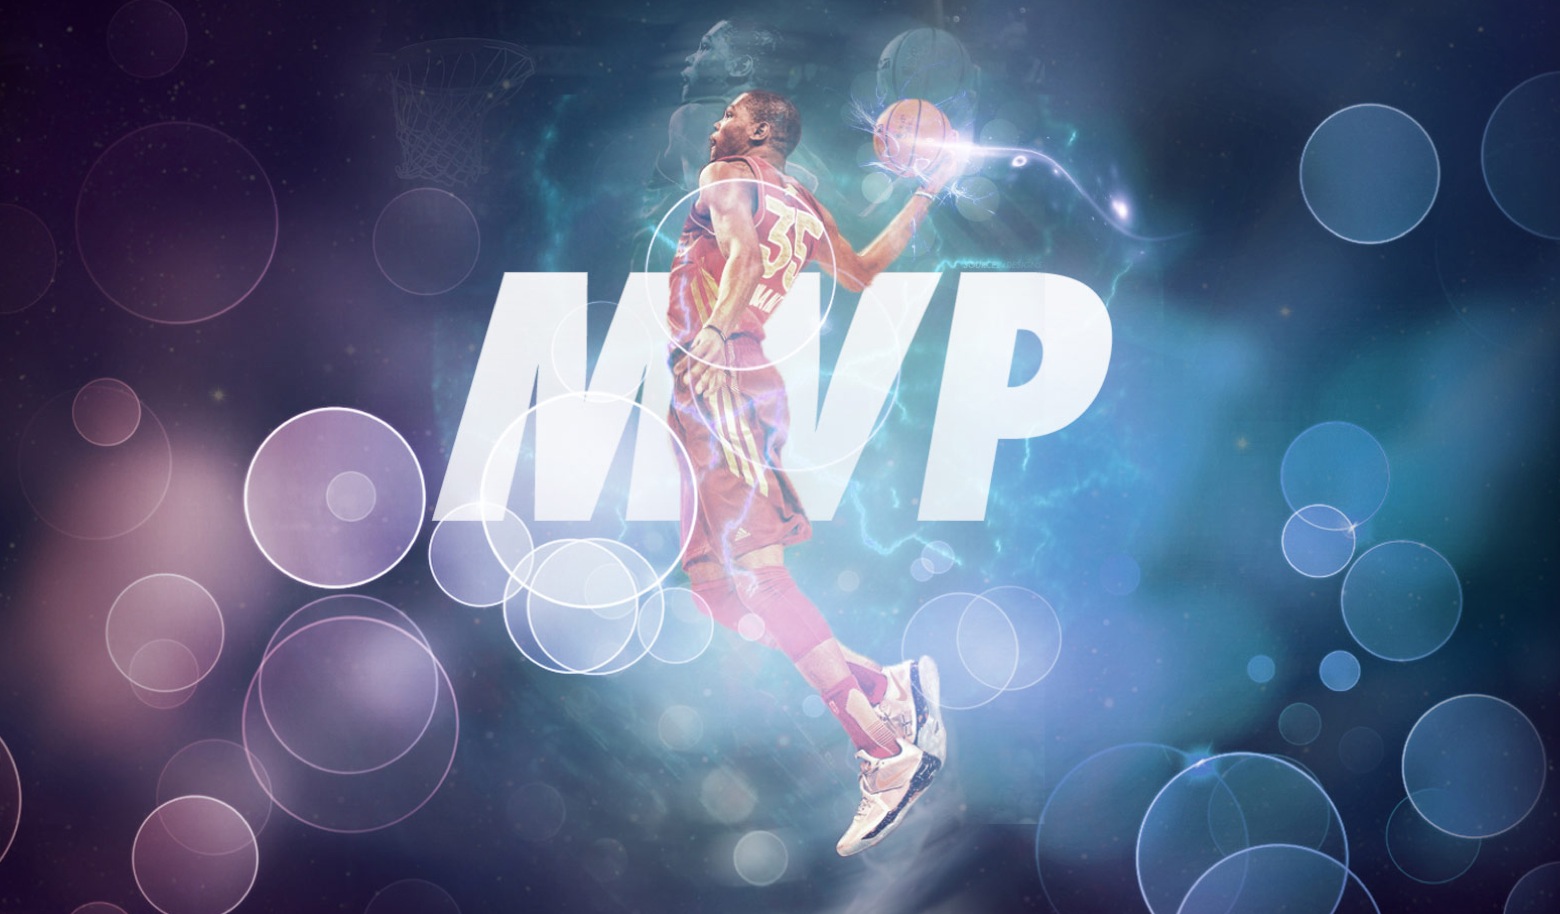 Kevin Durant MVP 2014